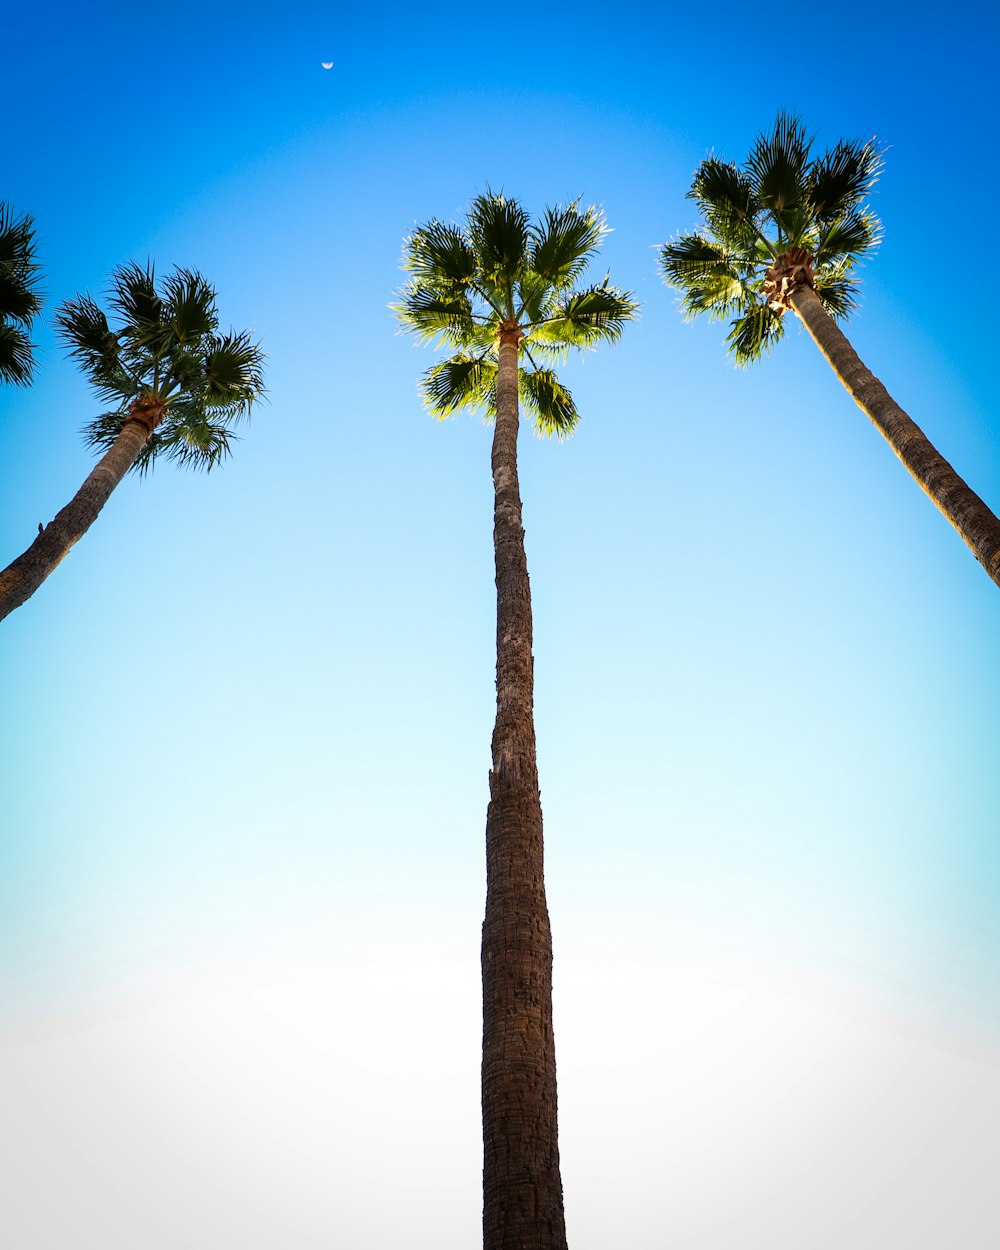 Un grupo de palmeras contra un cielo azul